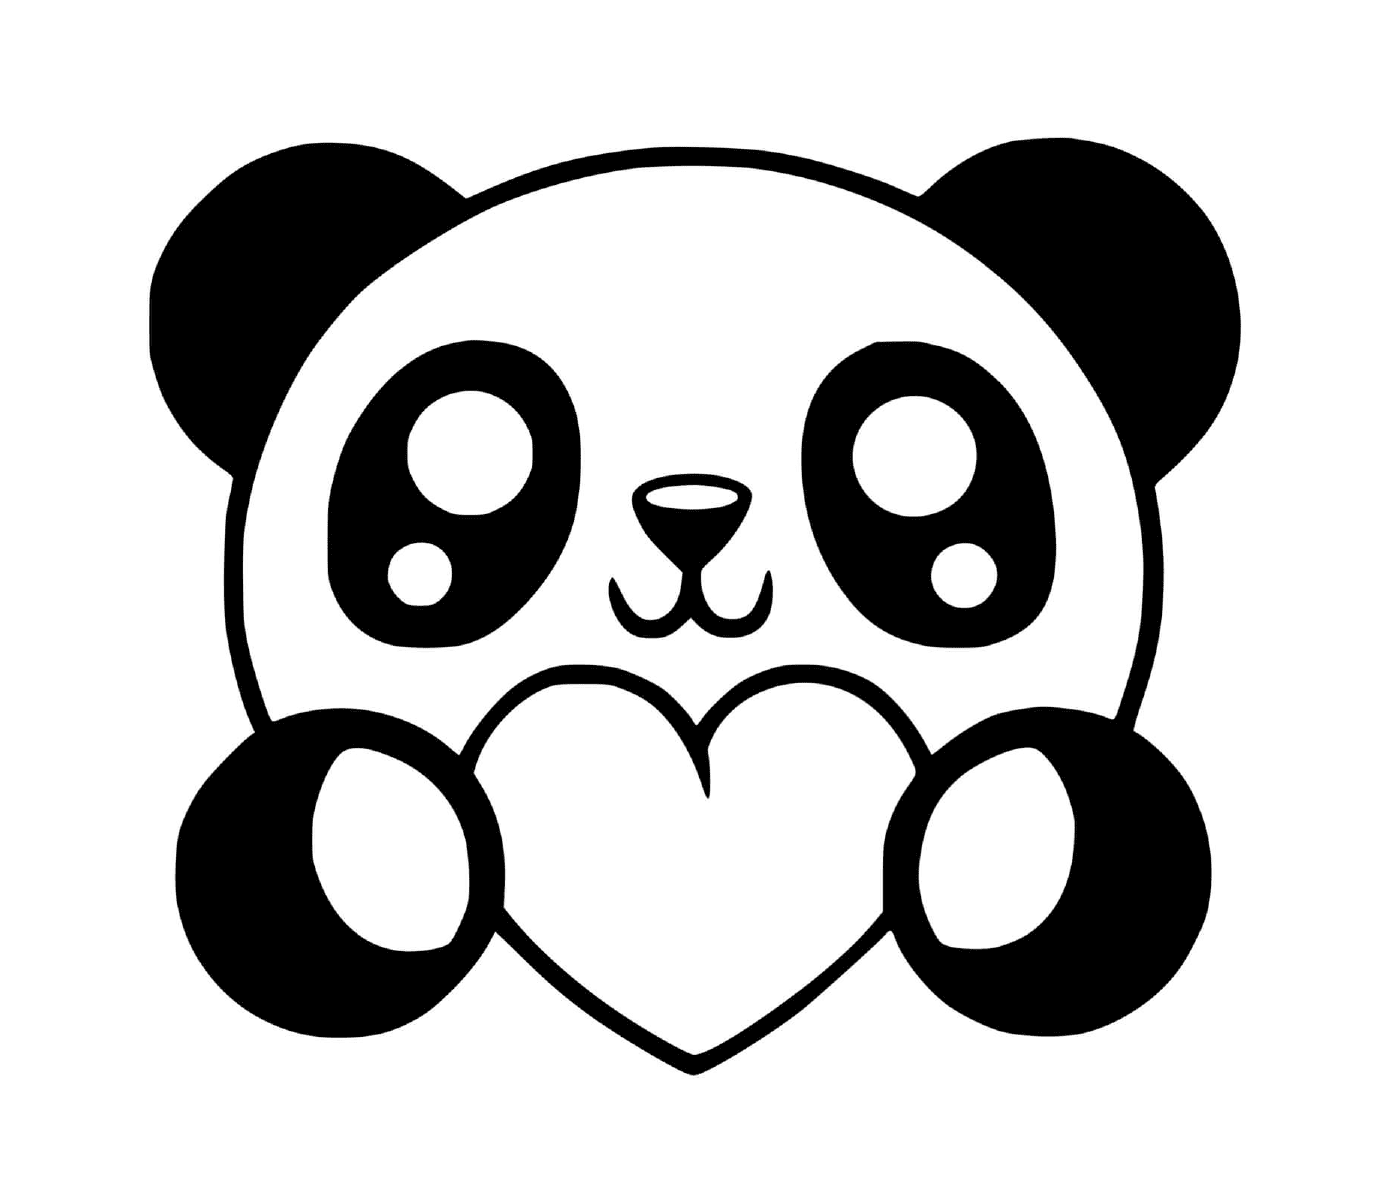  Panda heart kawaii, love and sweetness 